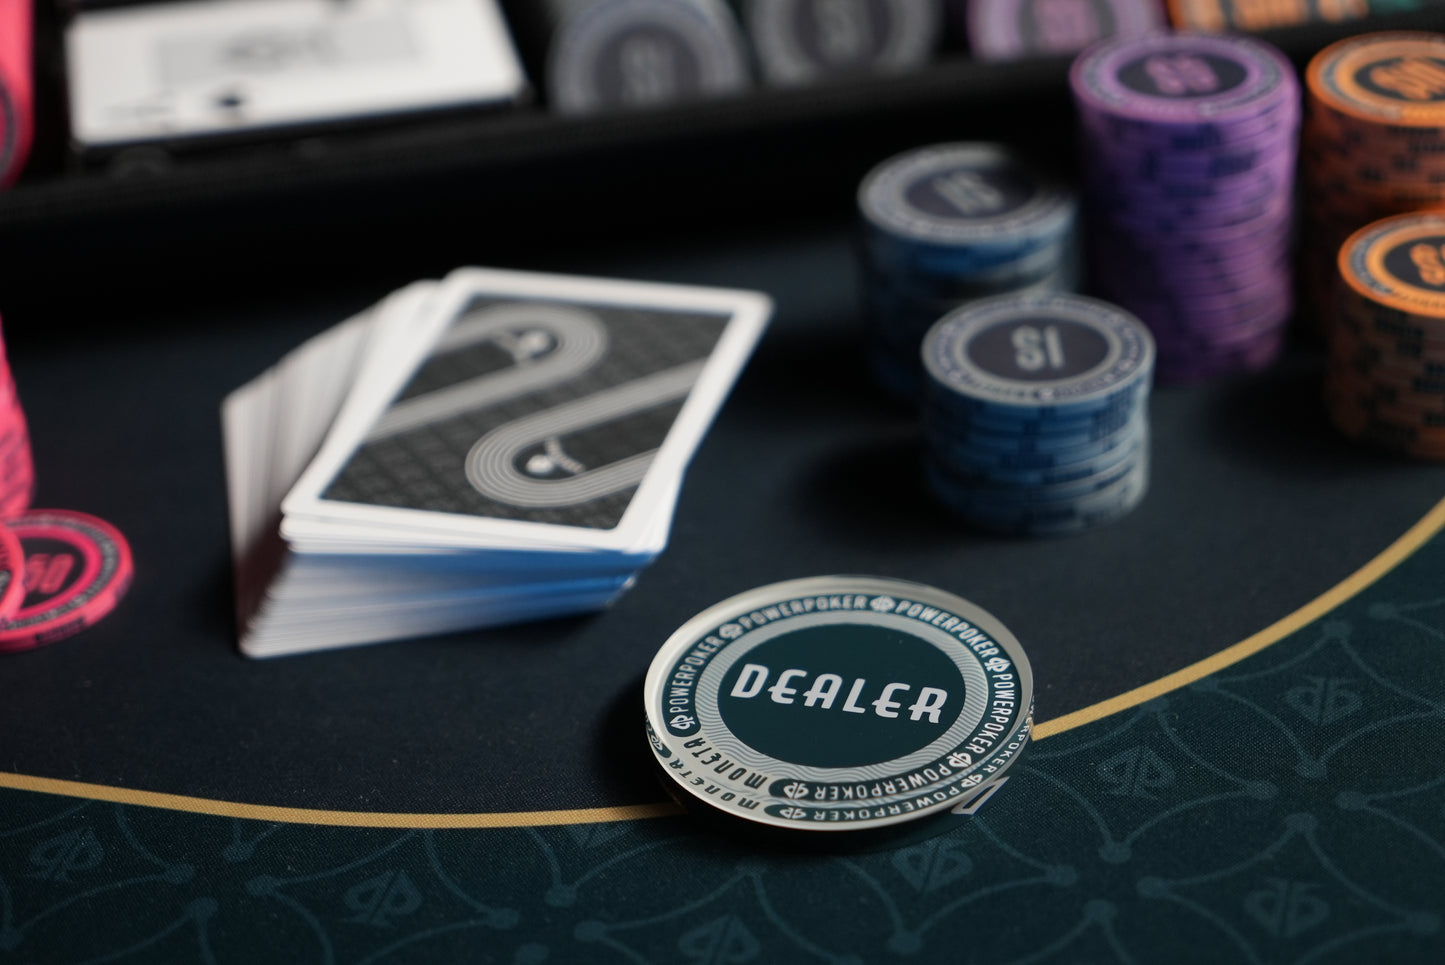 Poker case complete set - Moneta "Las Vegas" CASH 300